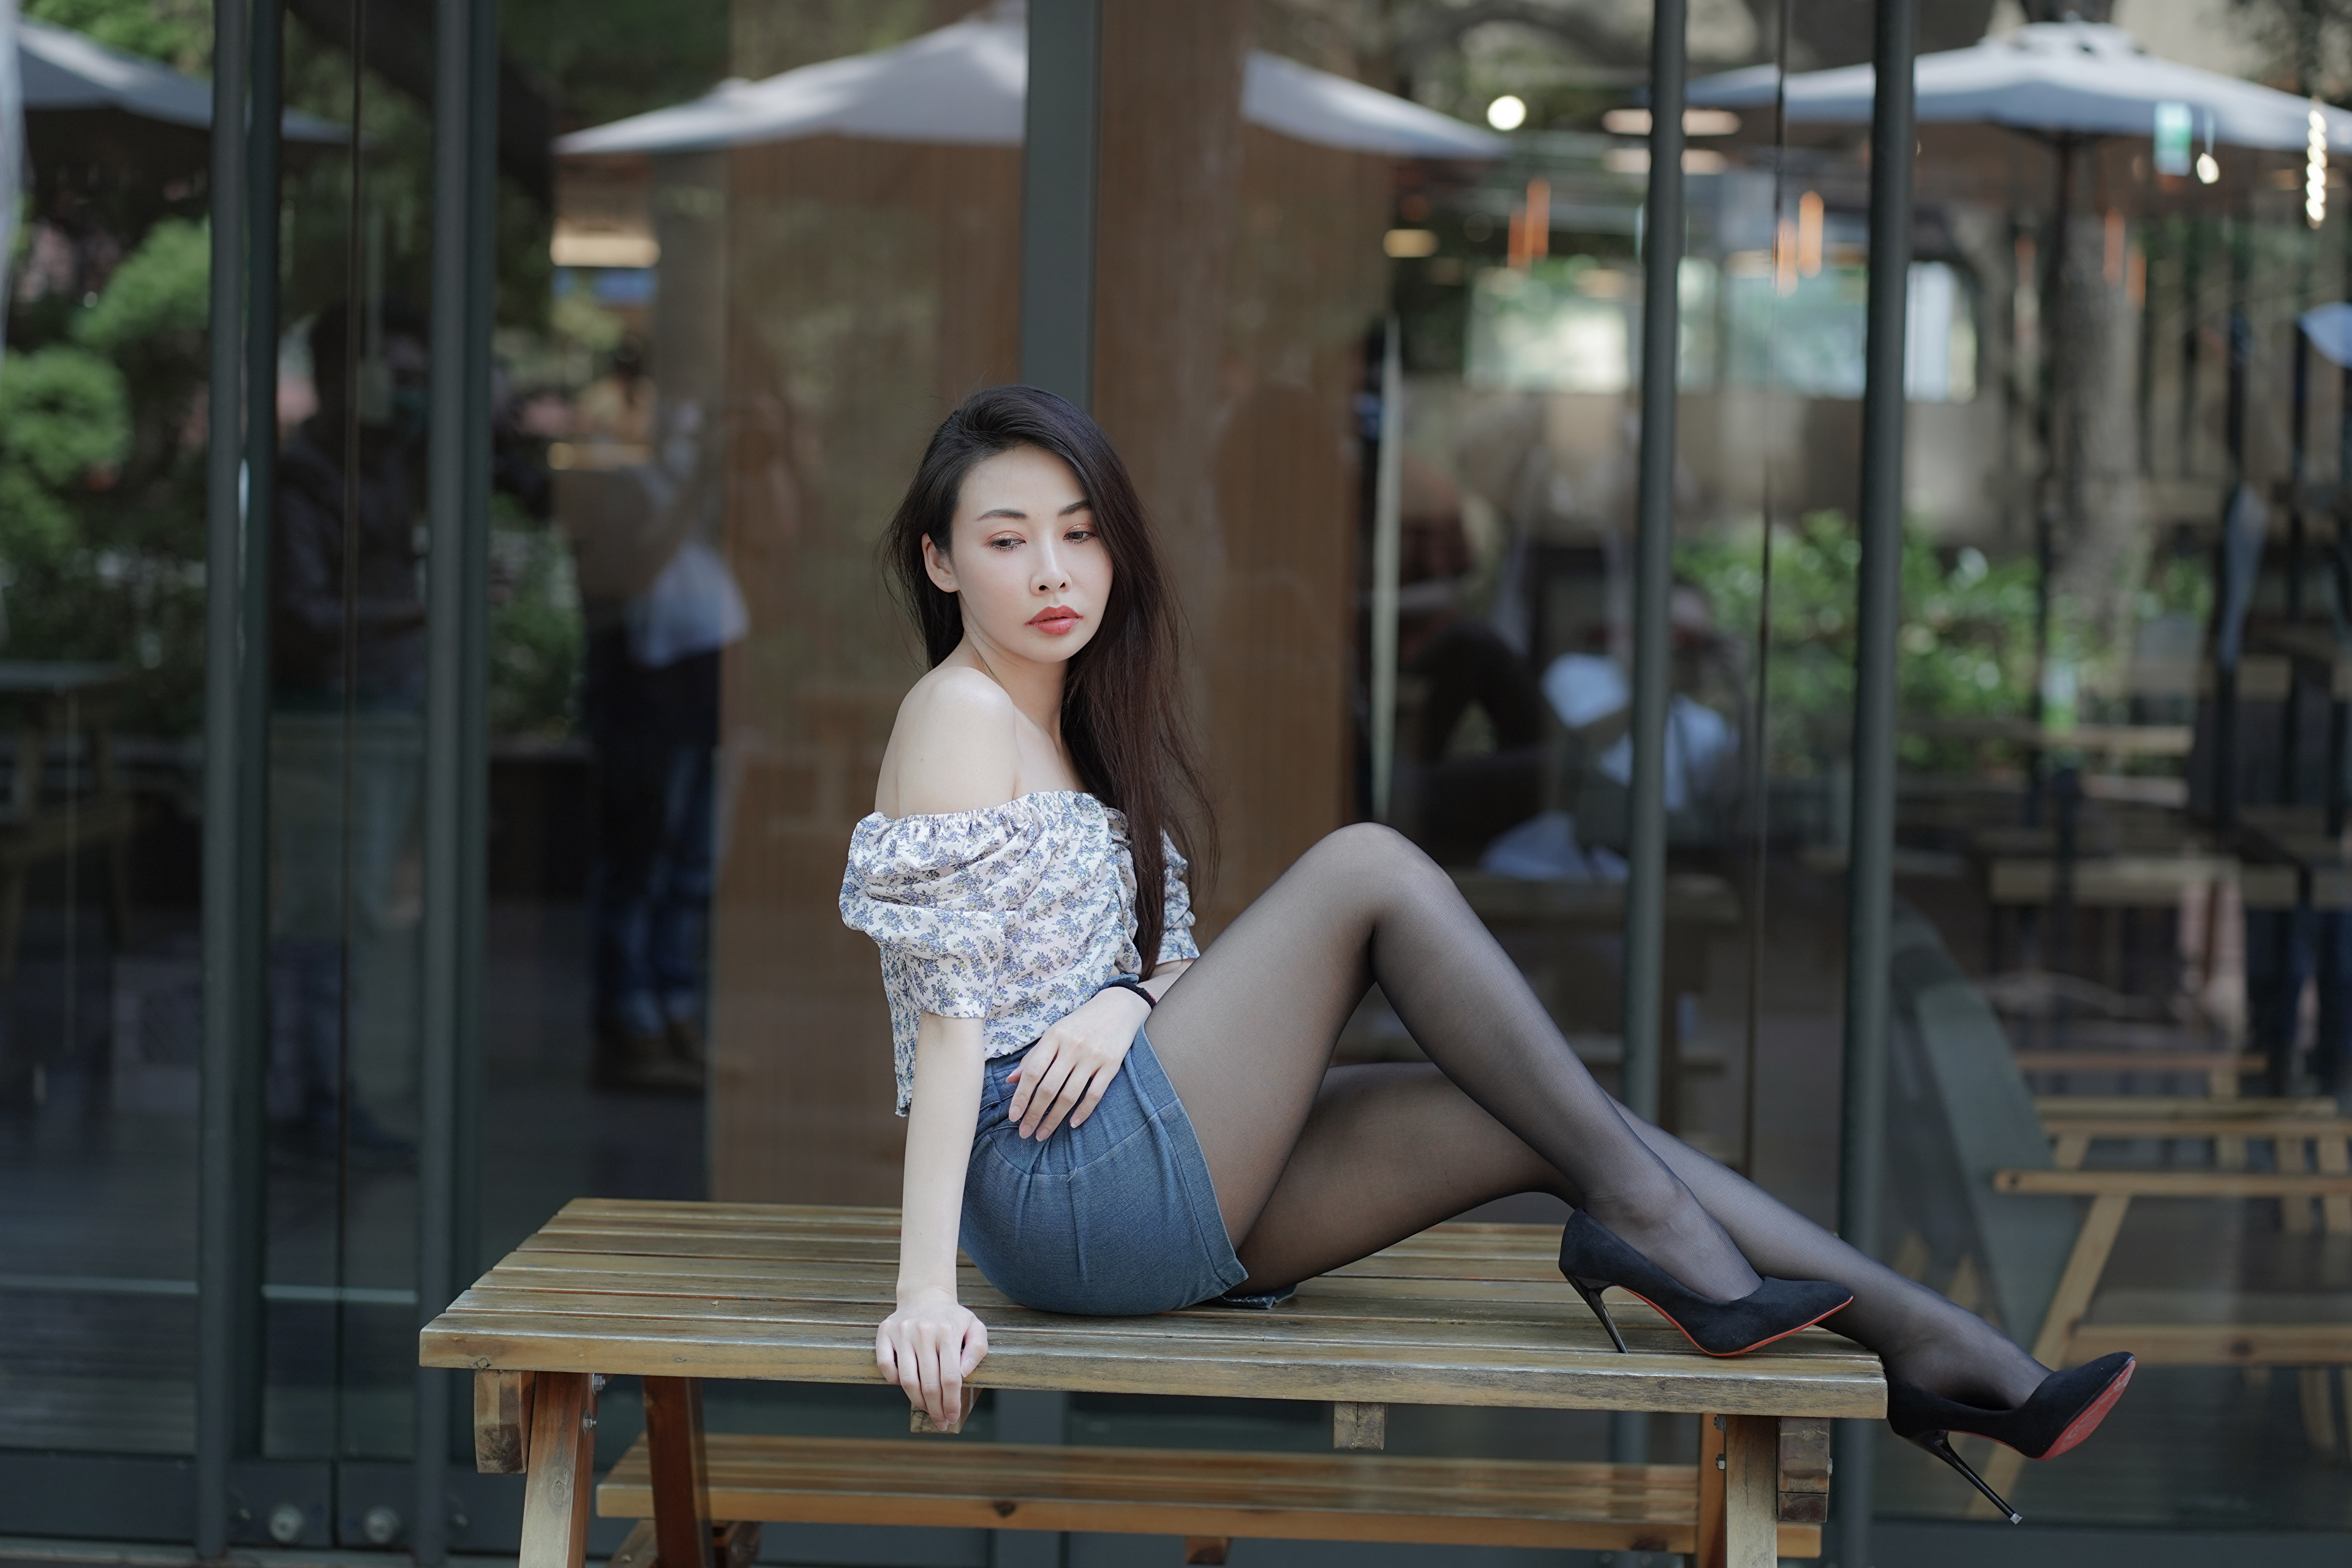 Asian Model Women Long Hair Dark Hair Sitting Women Outdoors Urban Heels Black Heels Legs Skirt Look 3840x2560